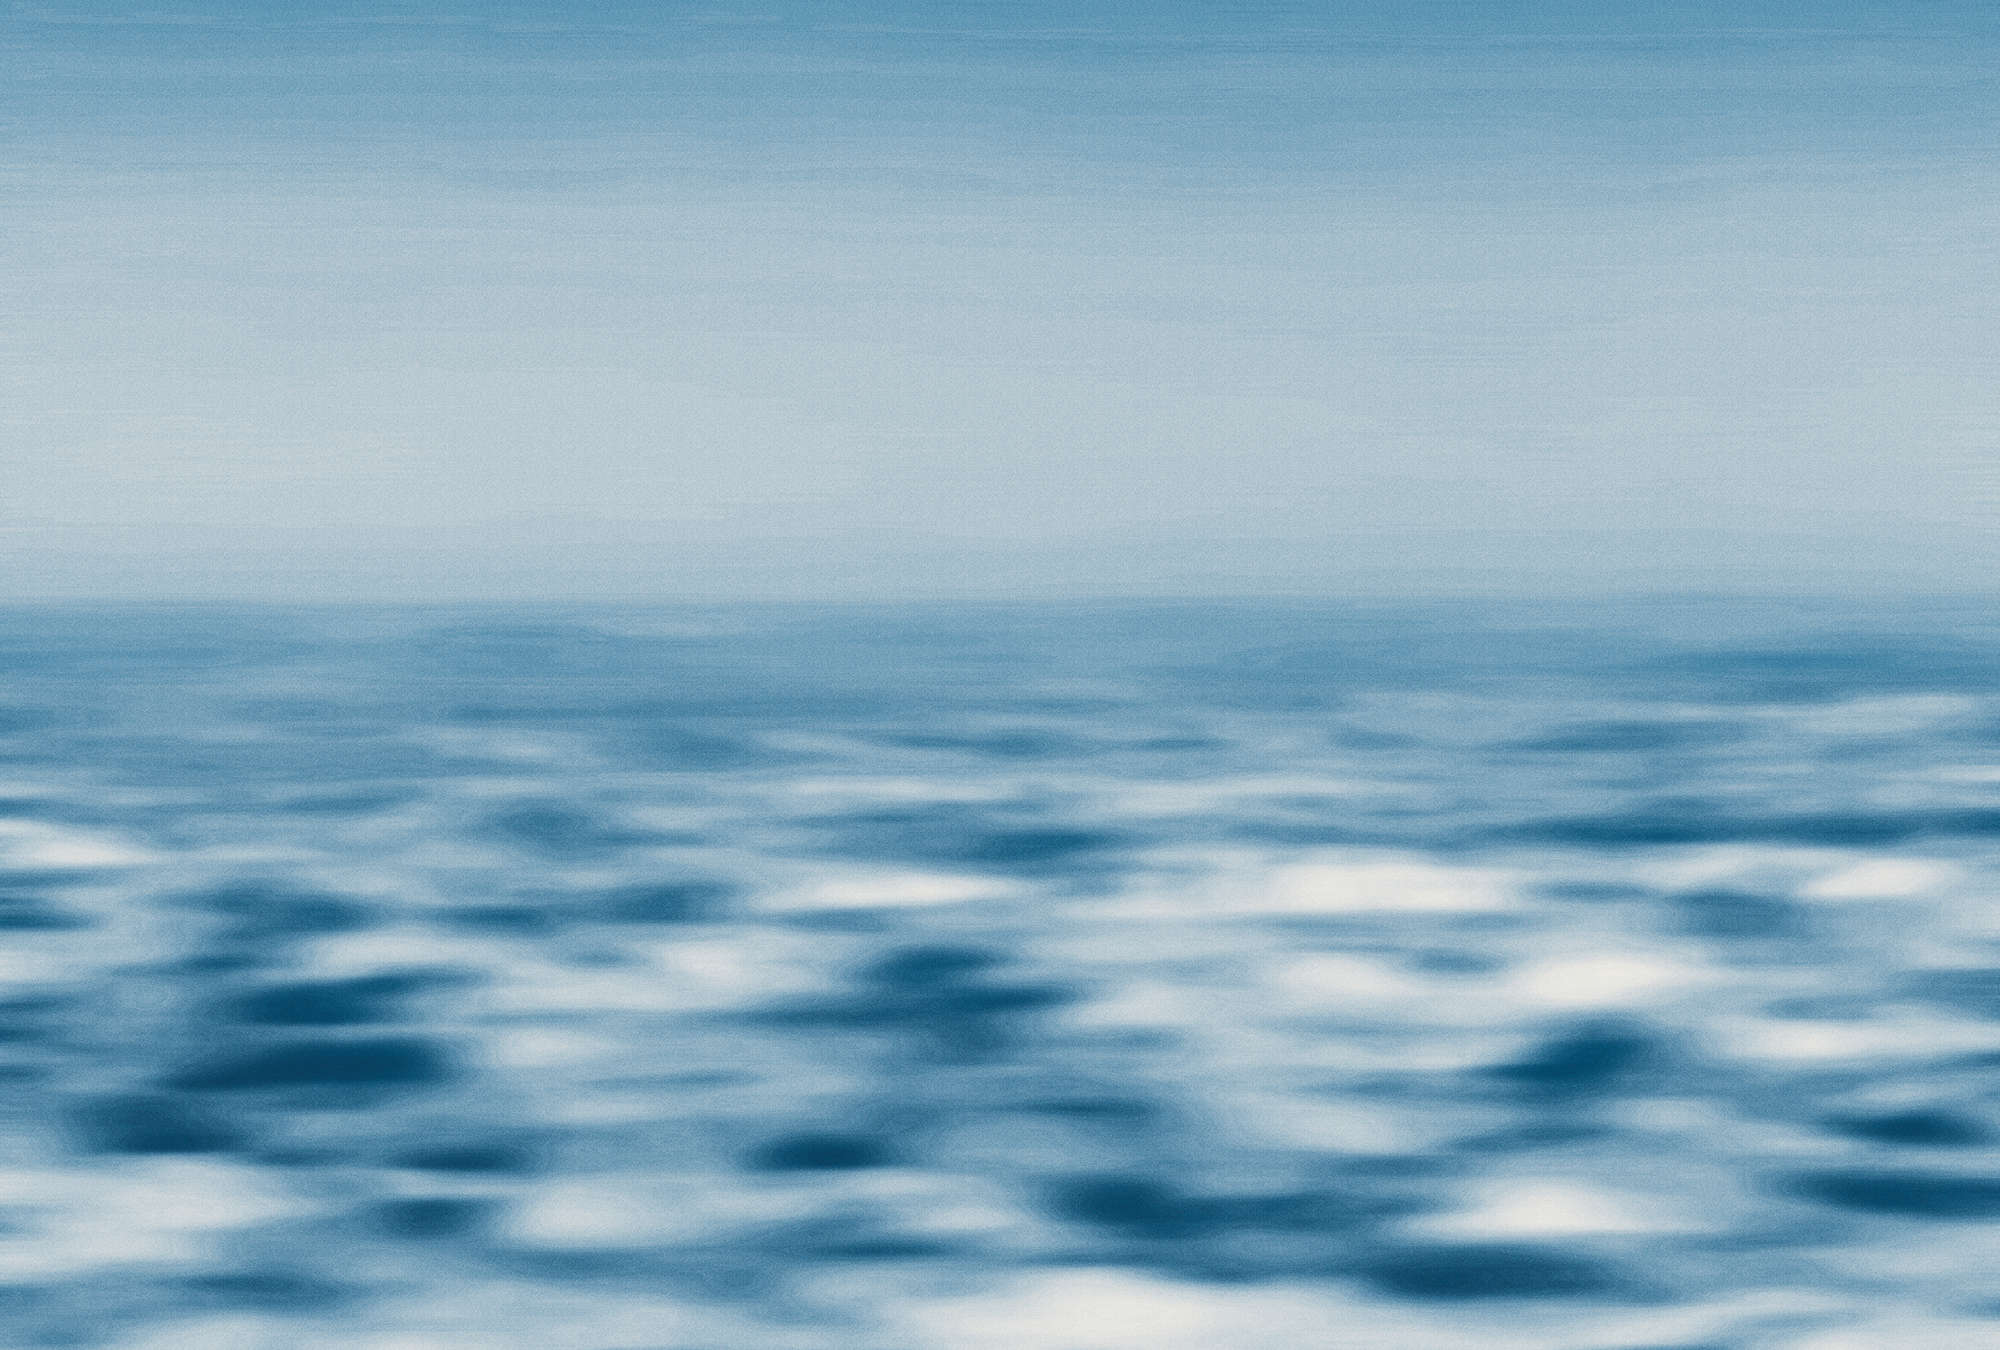             Fototapete abstrakter Meerblick, Wellen & Himmel – Blau, Weiß
        